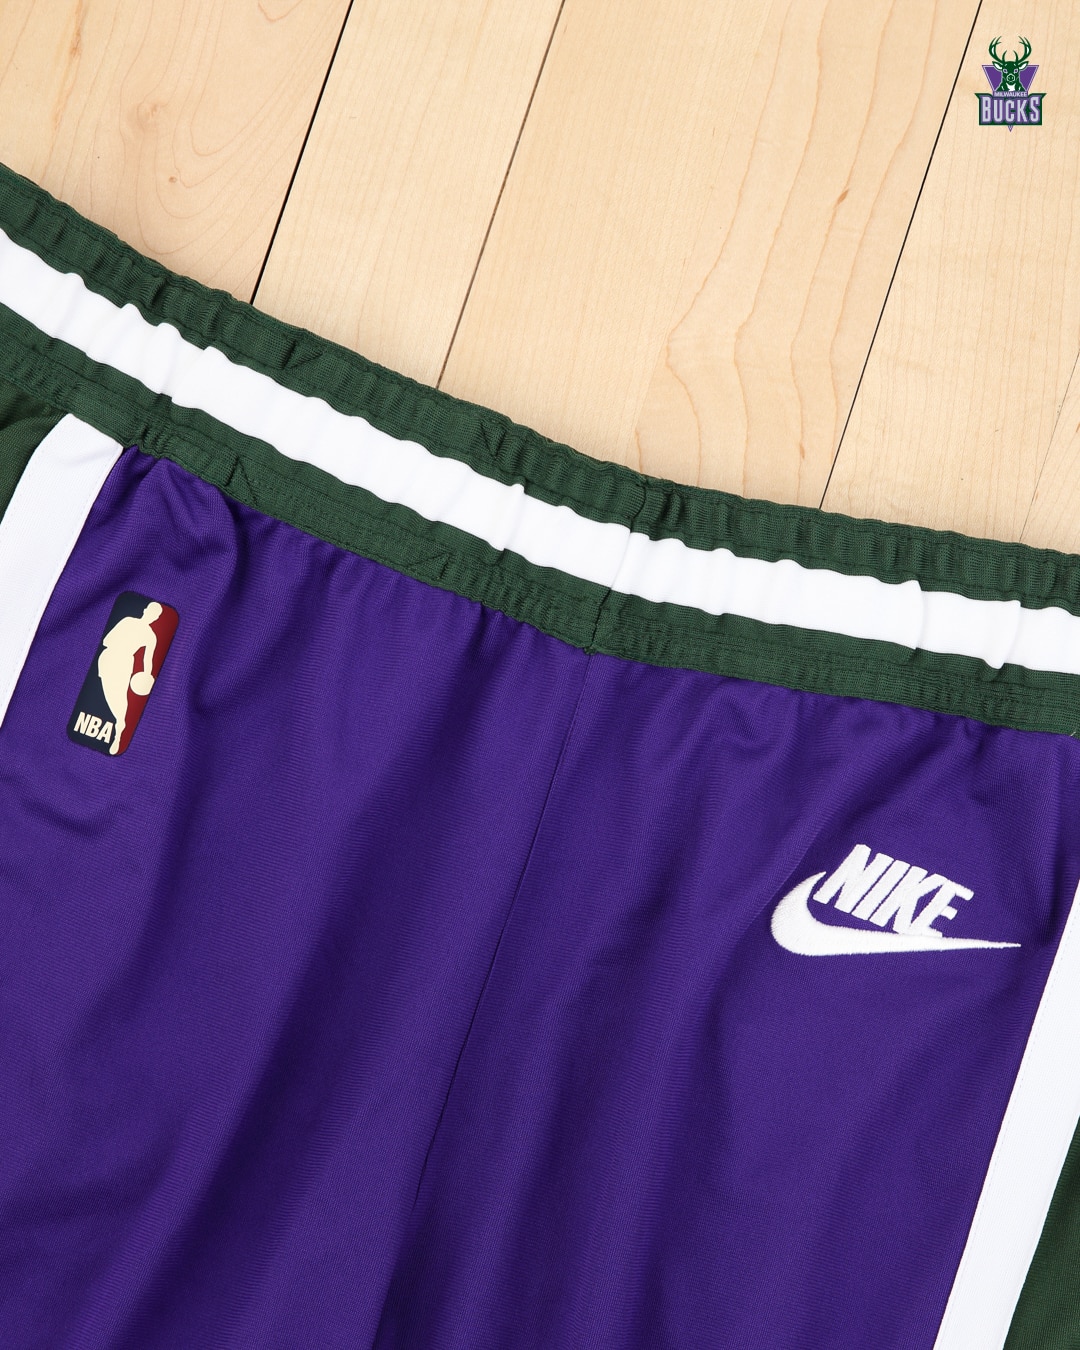 Purple is back! Bucks unveil new 'Light It Up' Classic Edition uniforms